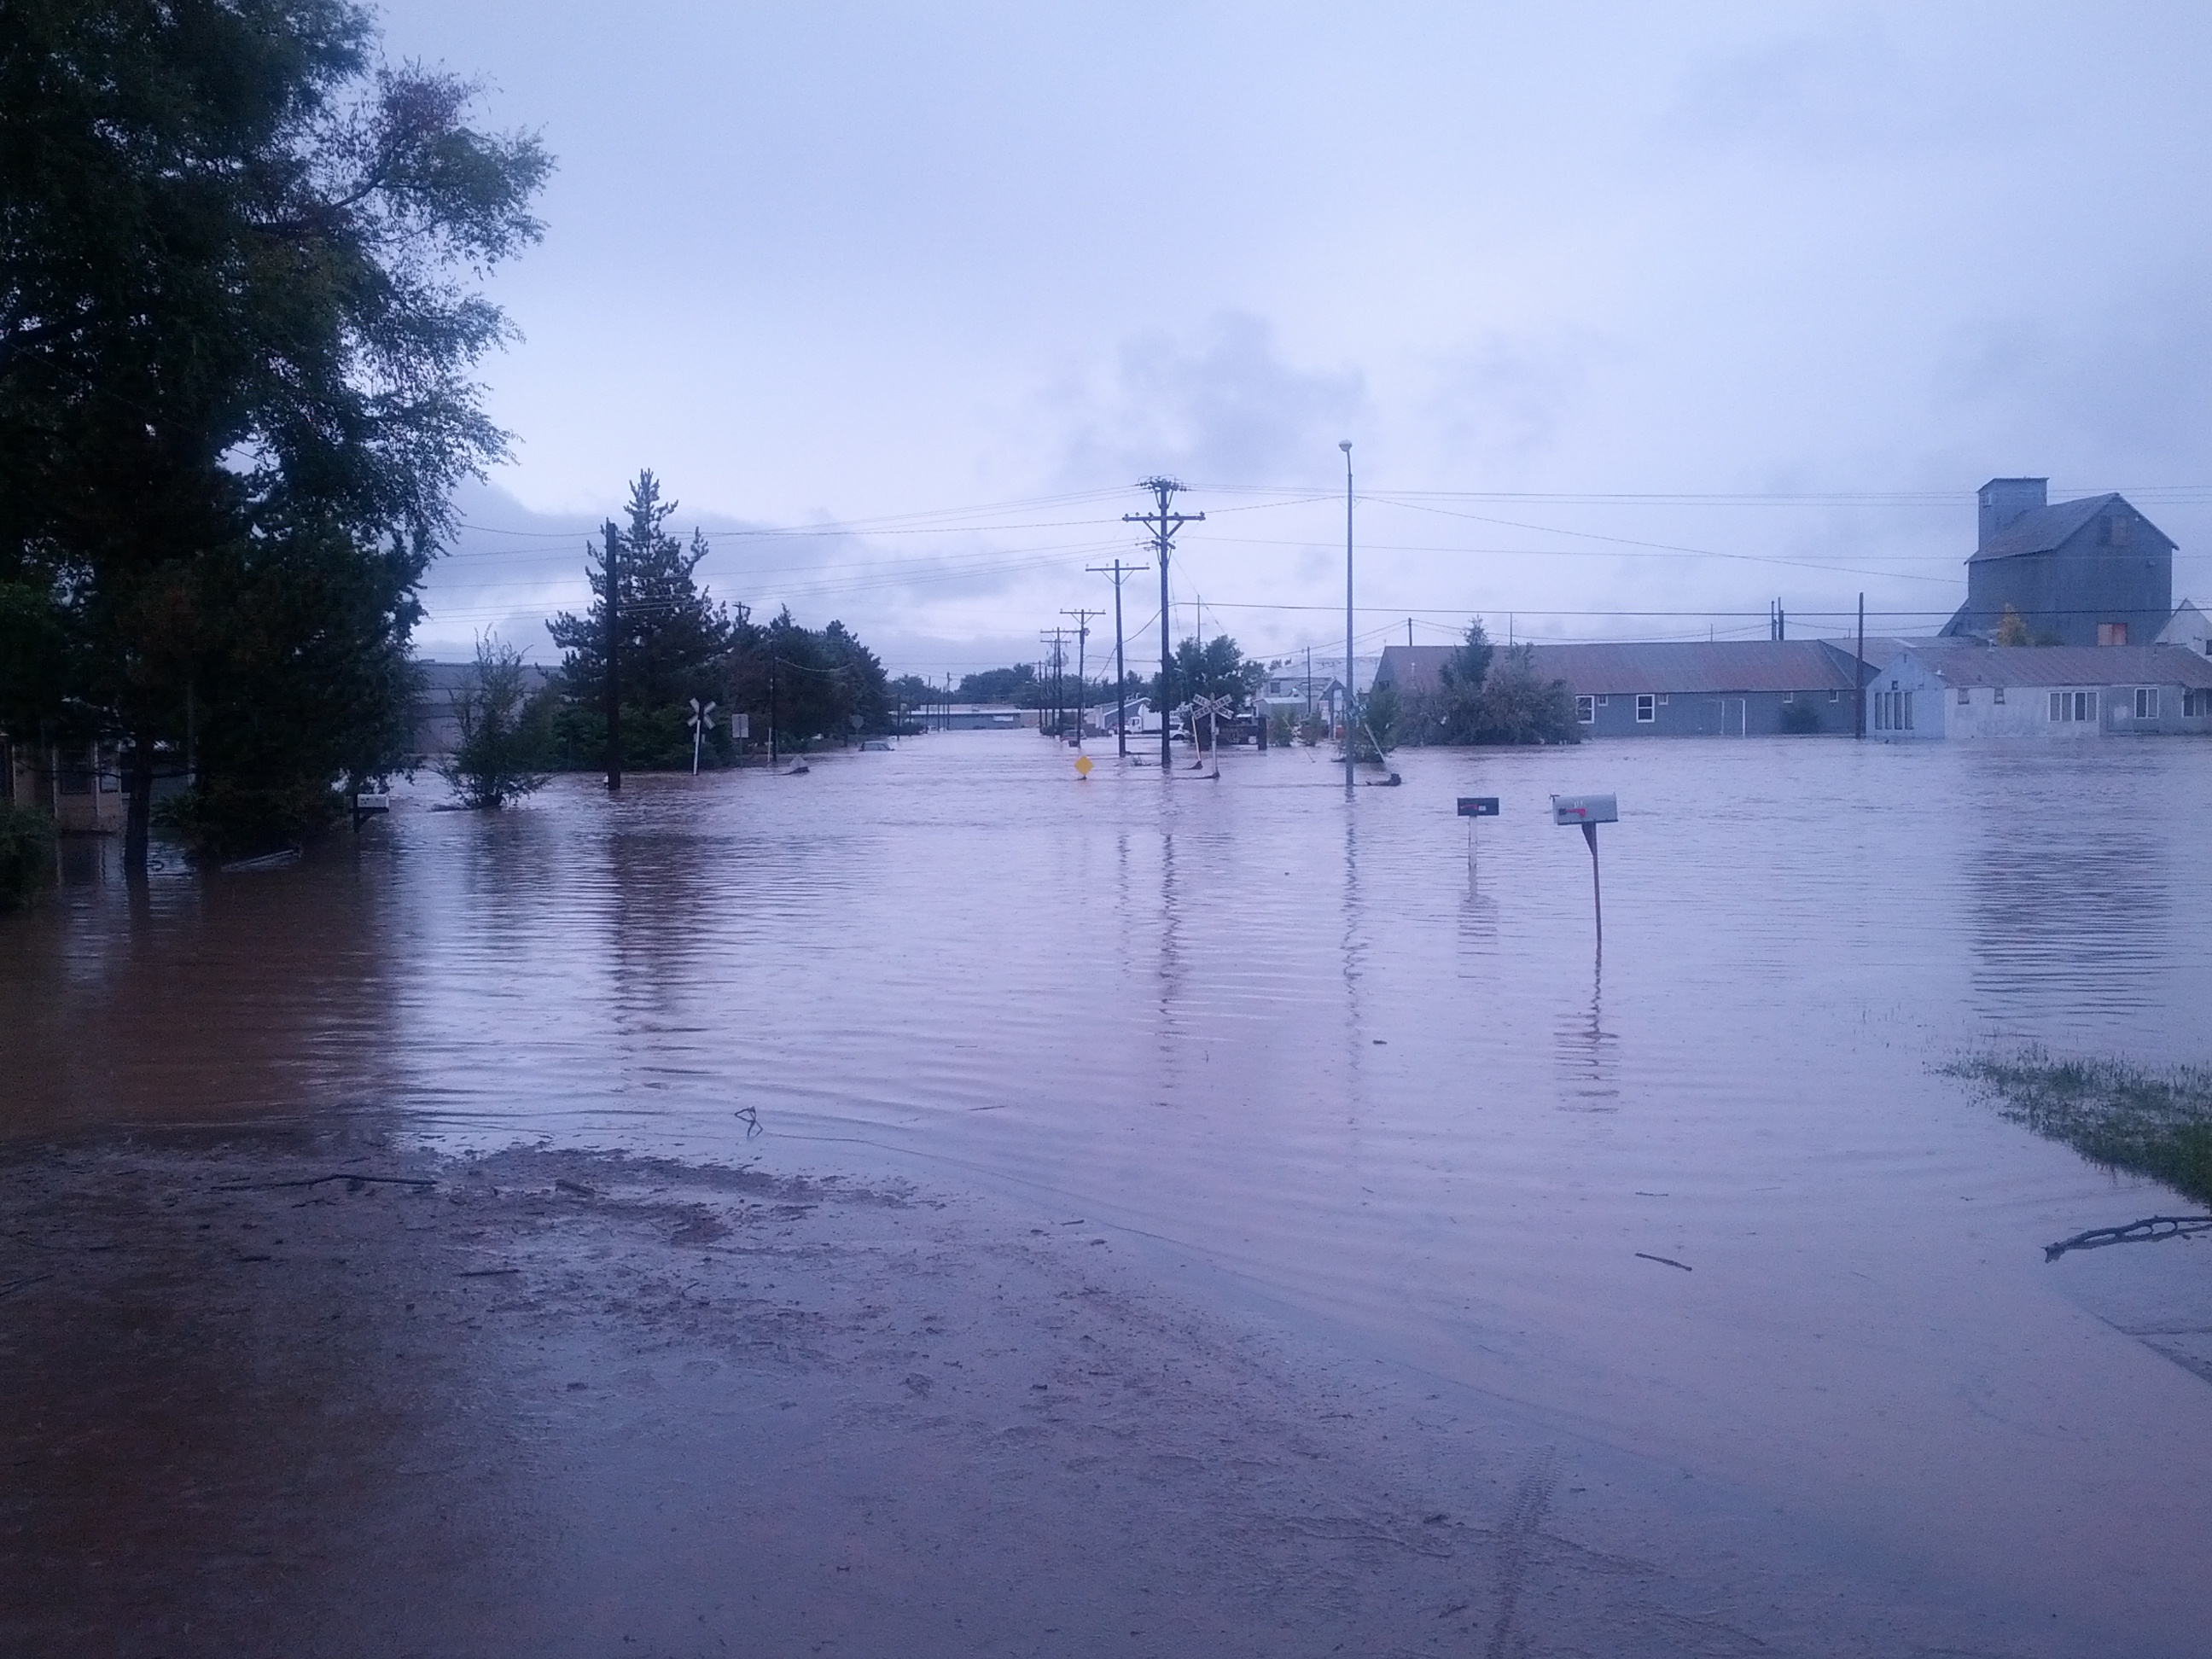 Flood streets for several blocks.